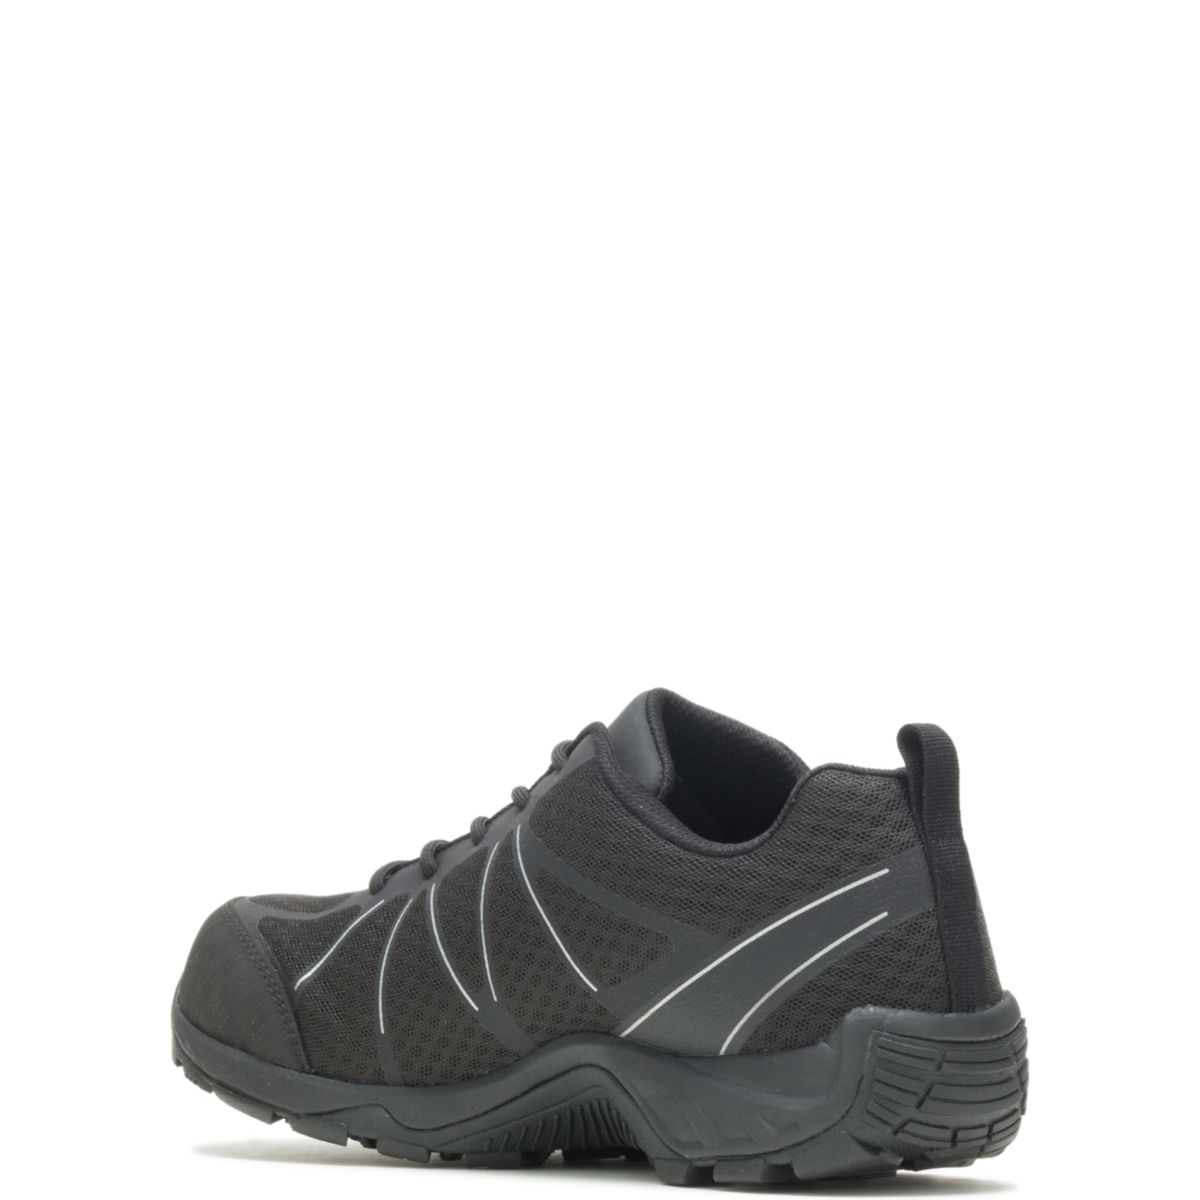 WOLVERINE Men's Amherst II CarbonMAXÂ® Composite Toe Work Shoe Black - W201147 BLACK - BLACK, 12